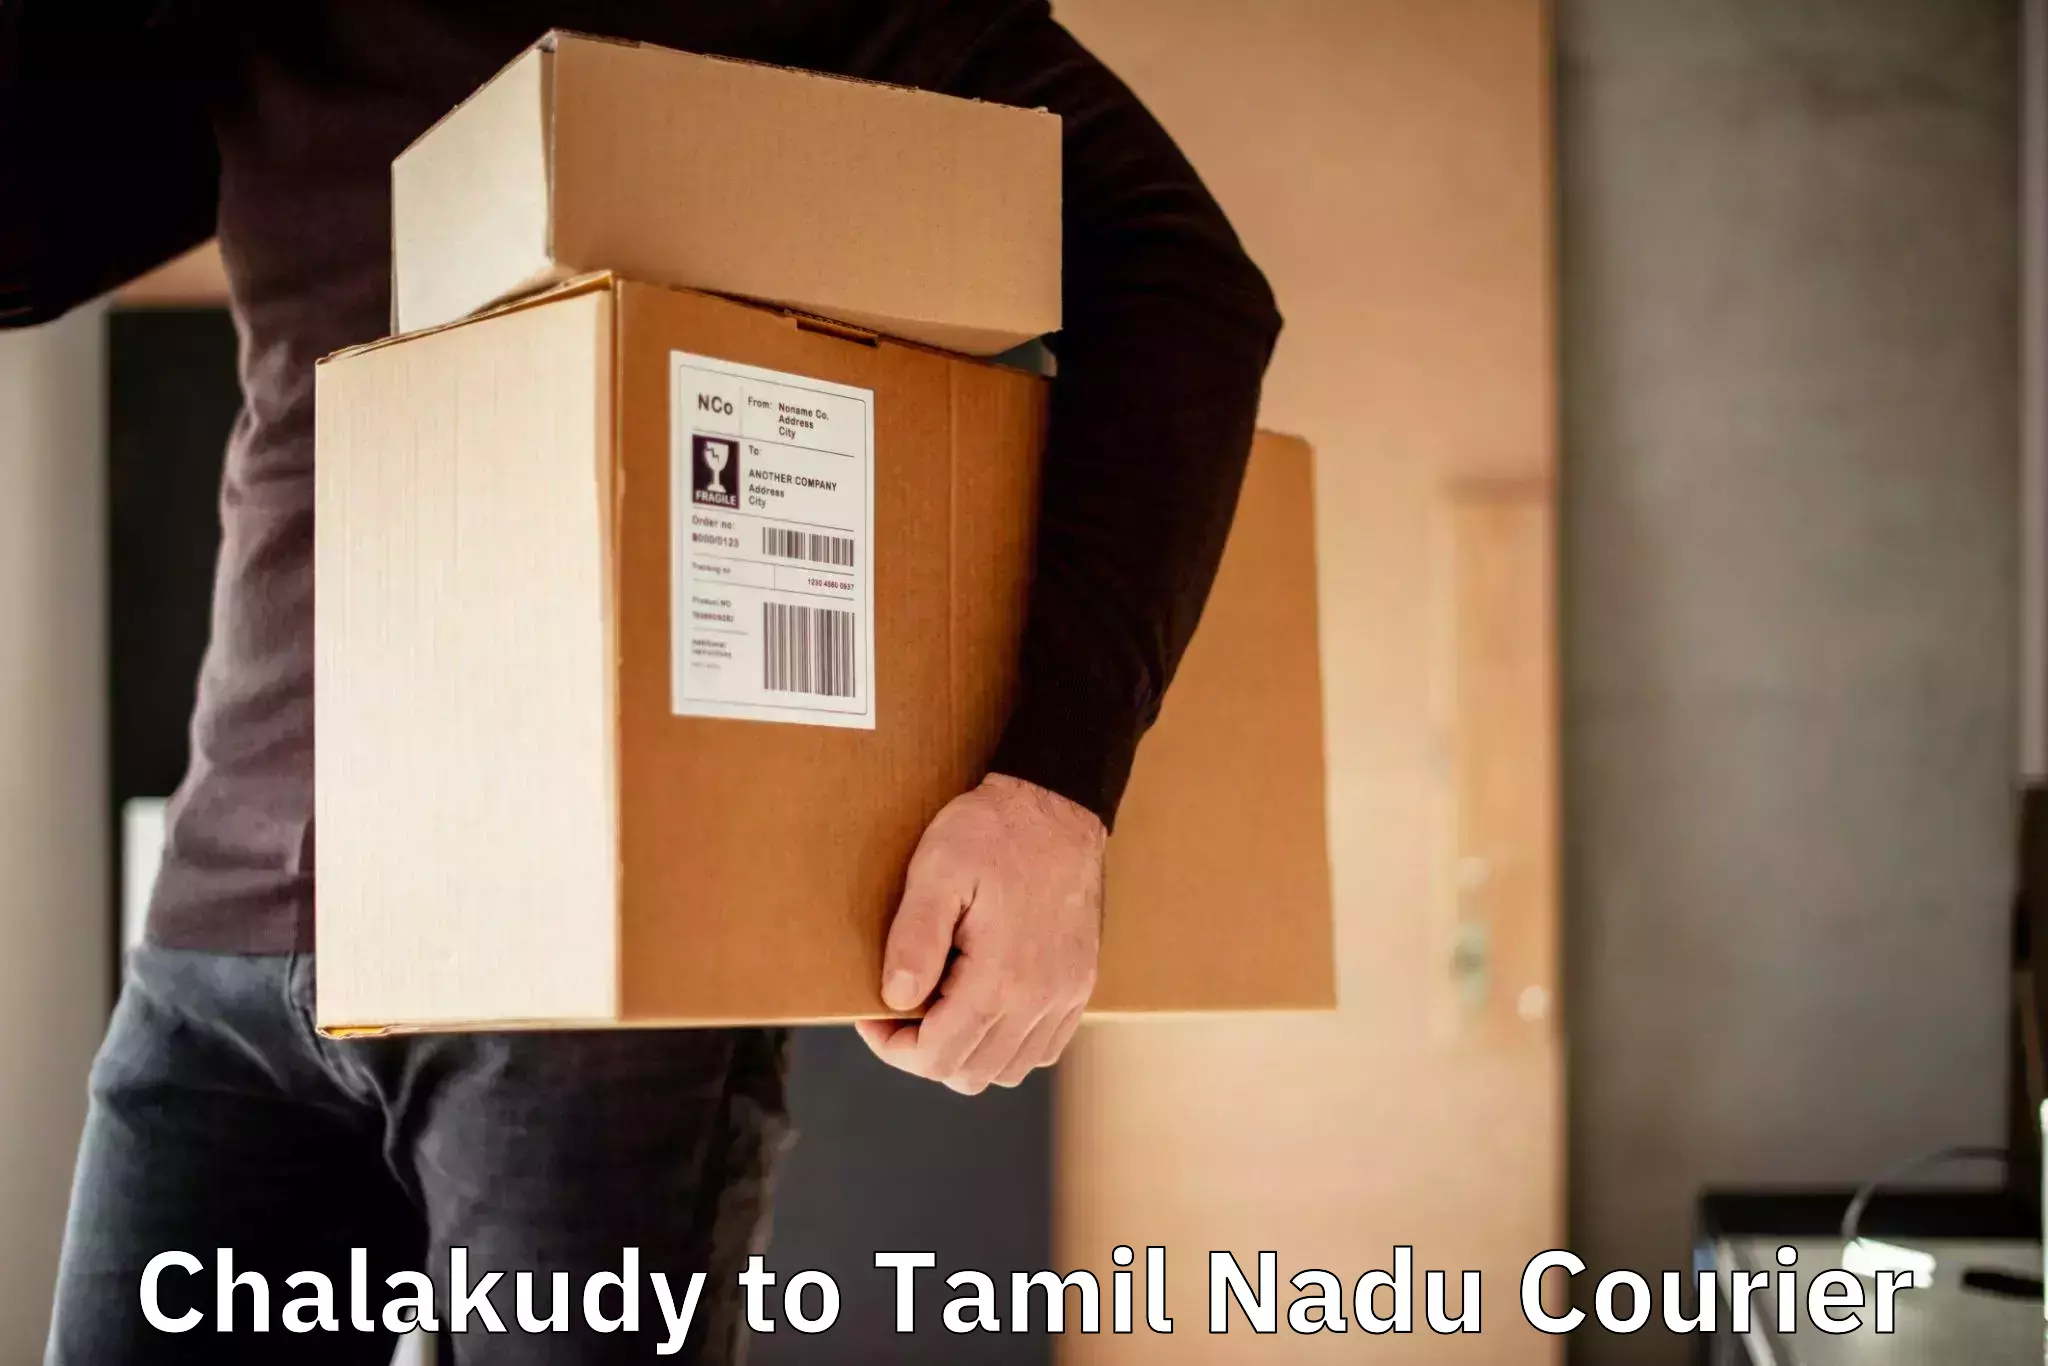 Courier service innovation Chalakudy to Devakottai